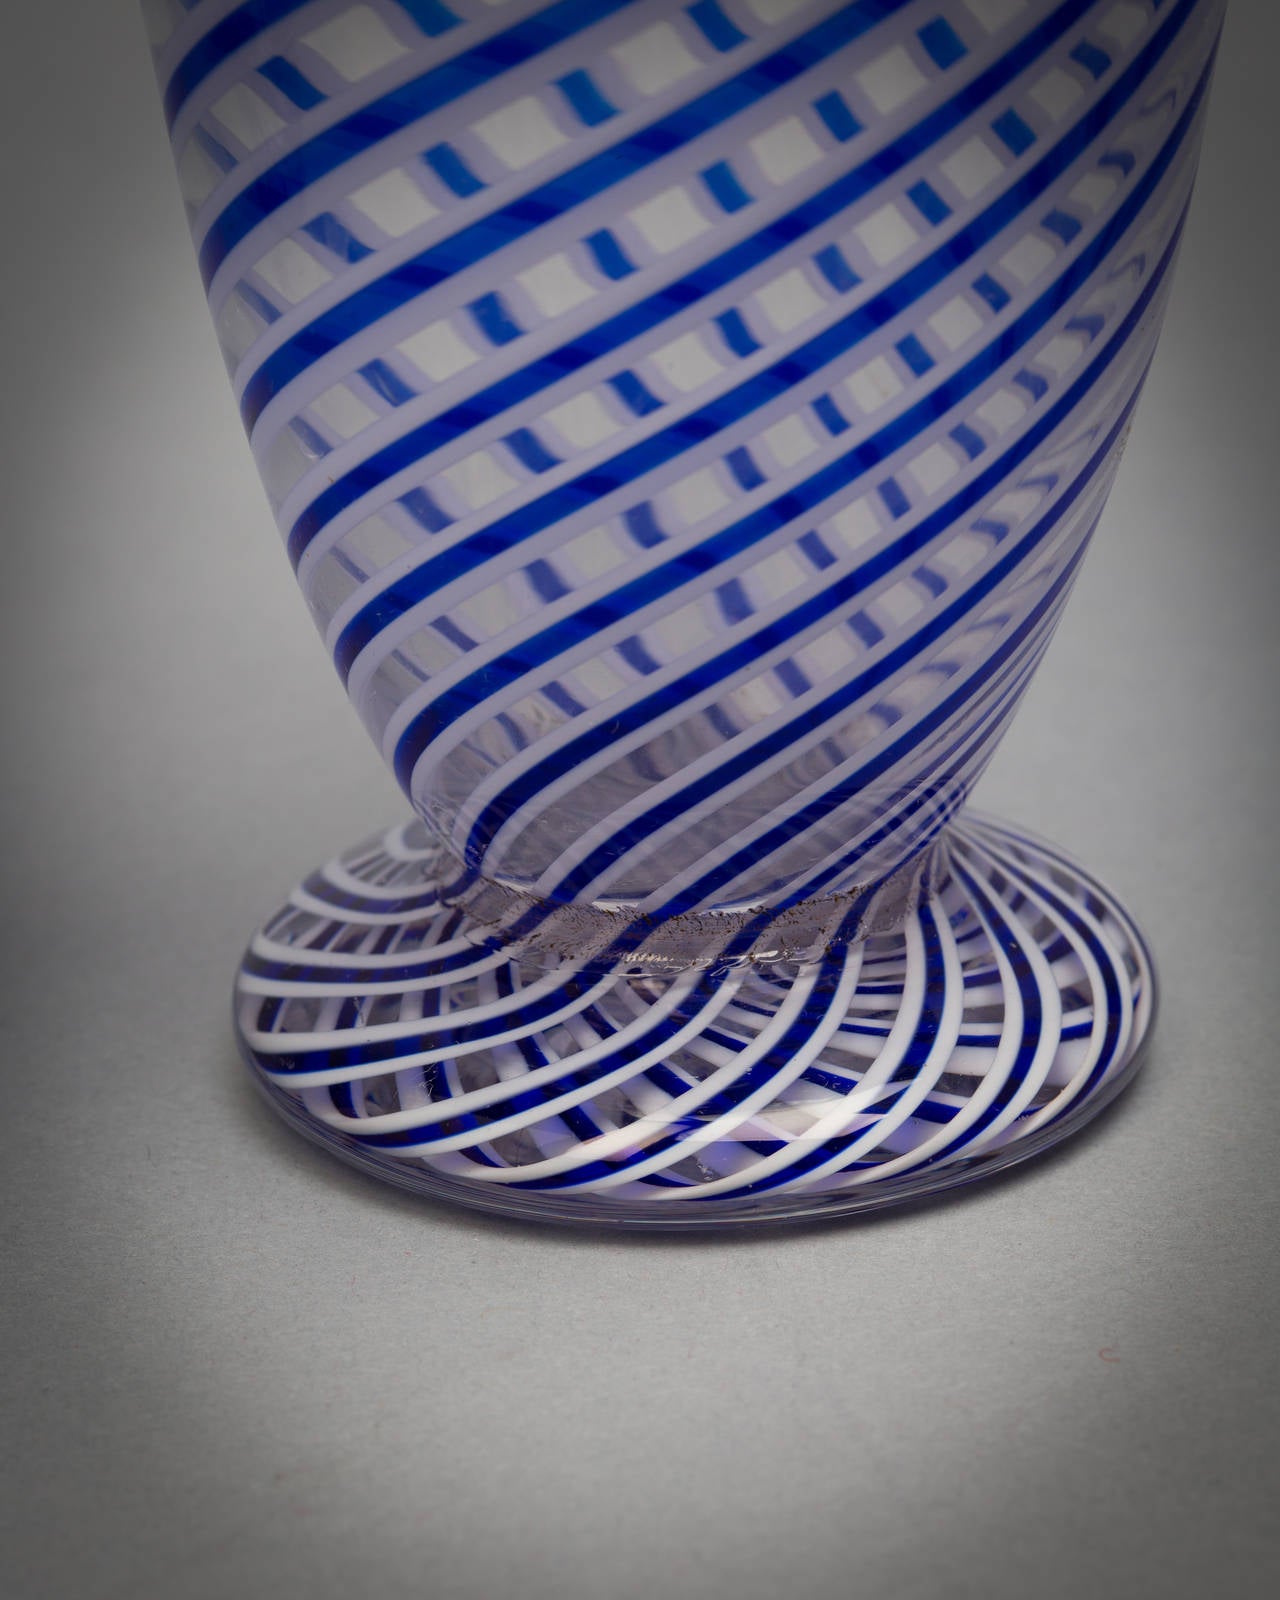 Pair of French 'Latticino' glass vases, circa 1880

Blue and white swirl pattern.